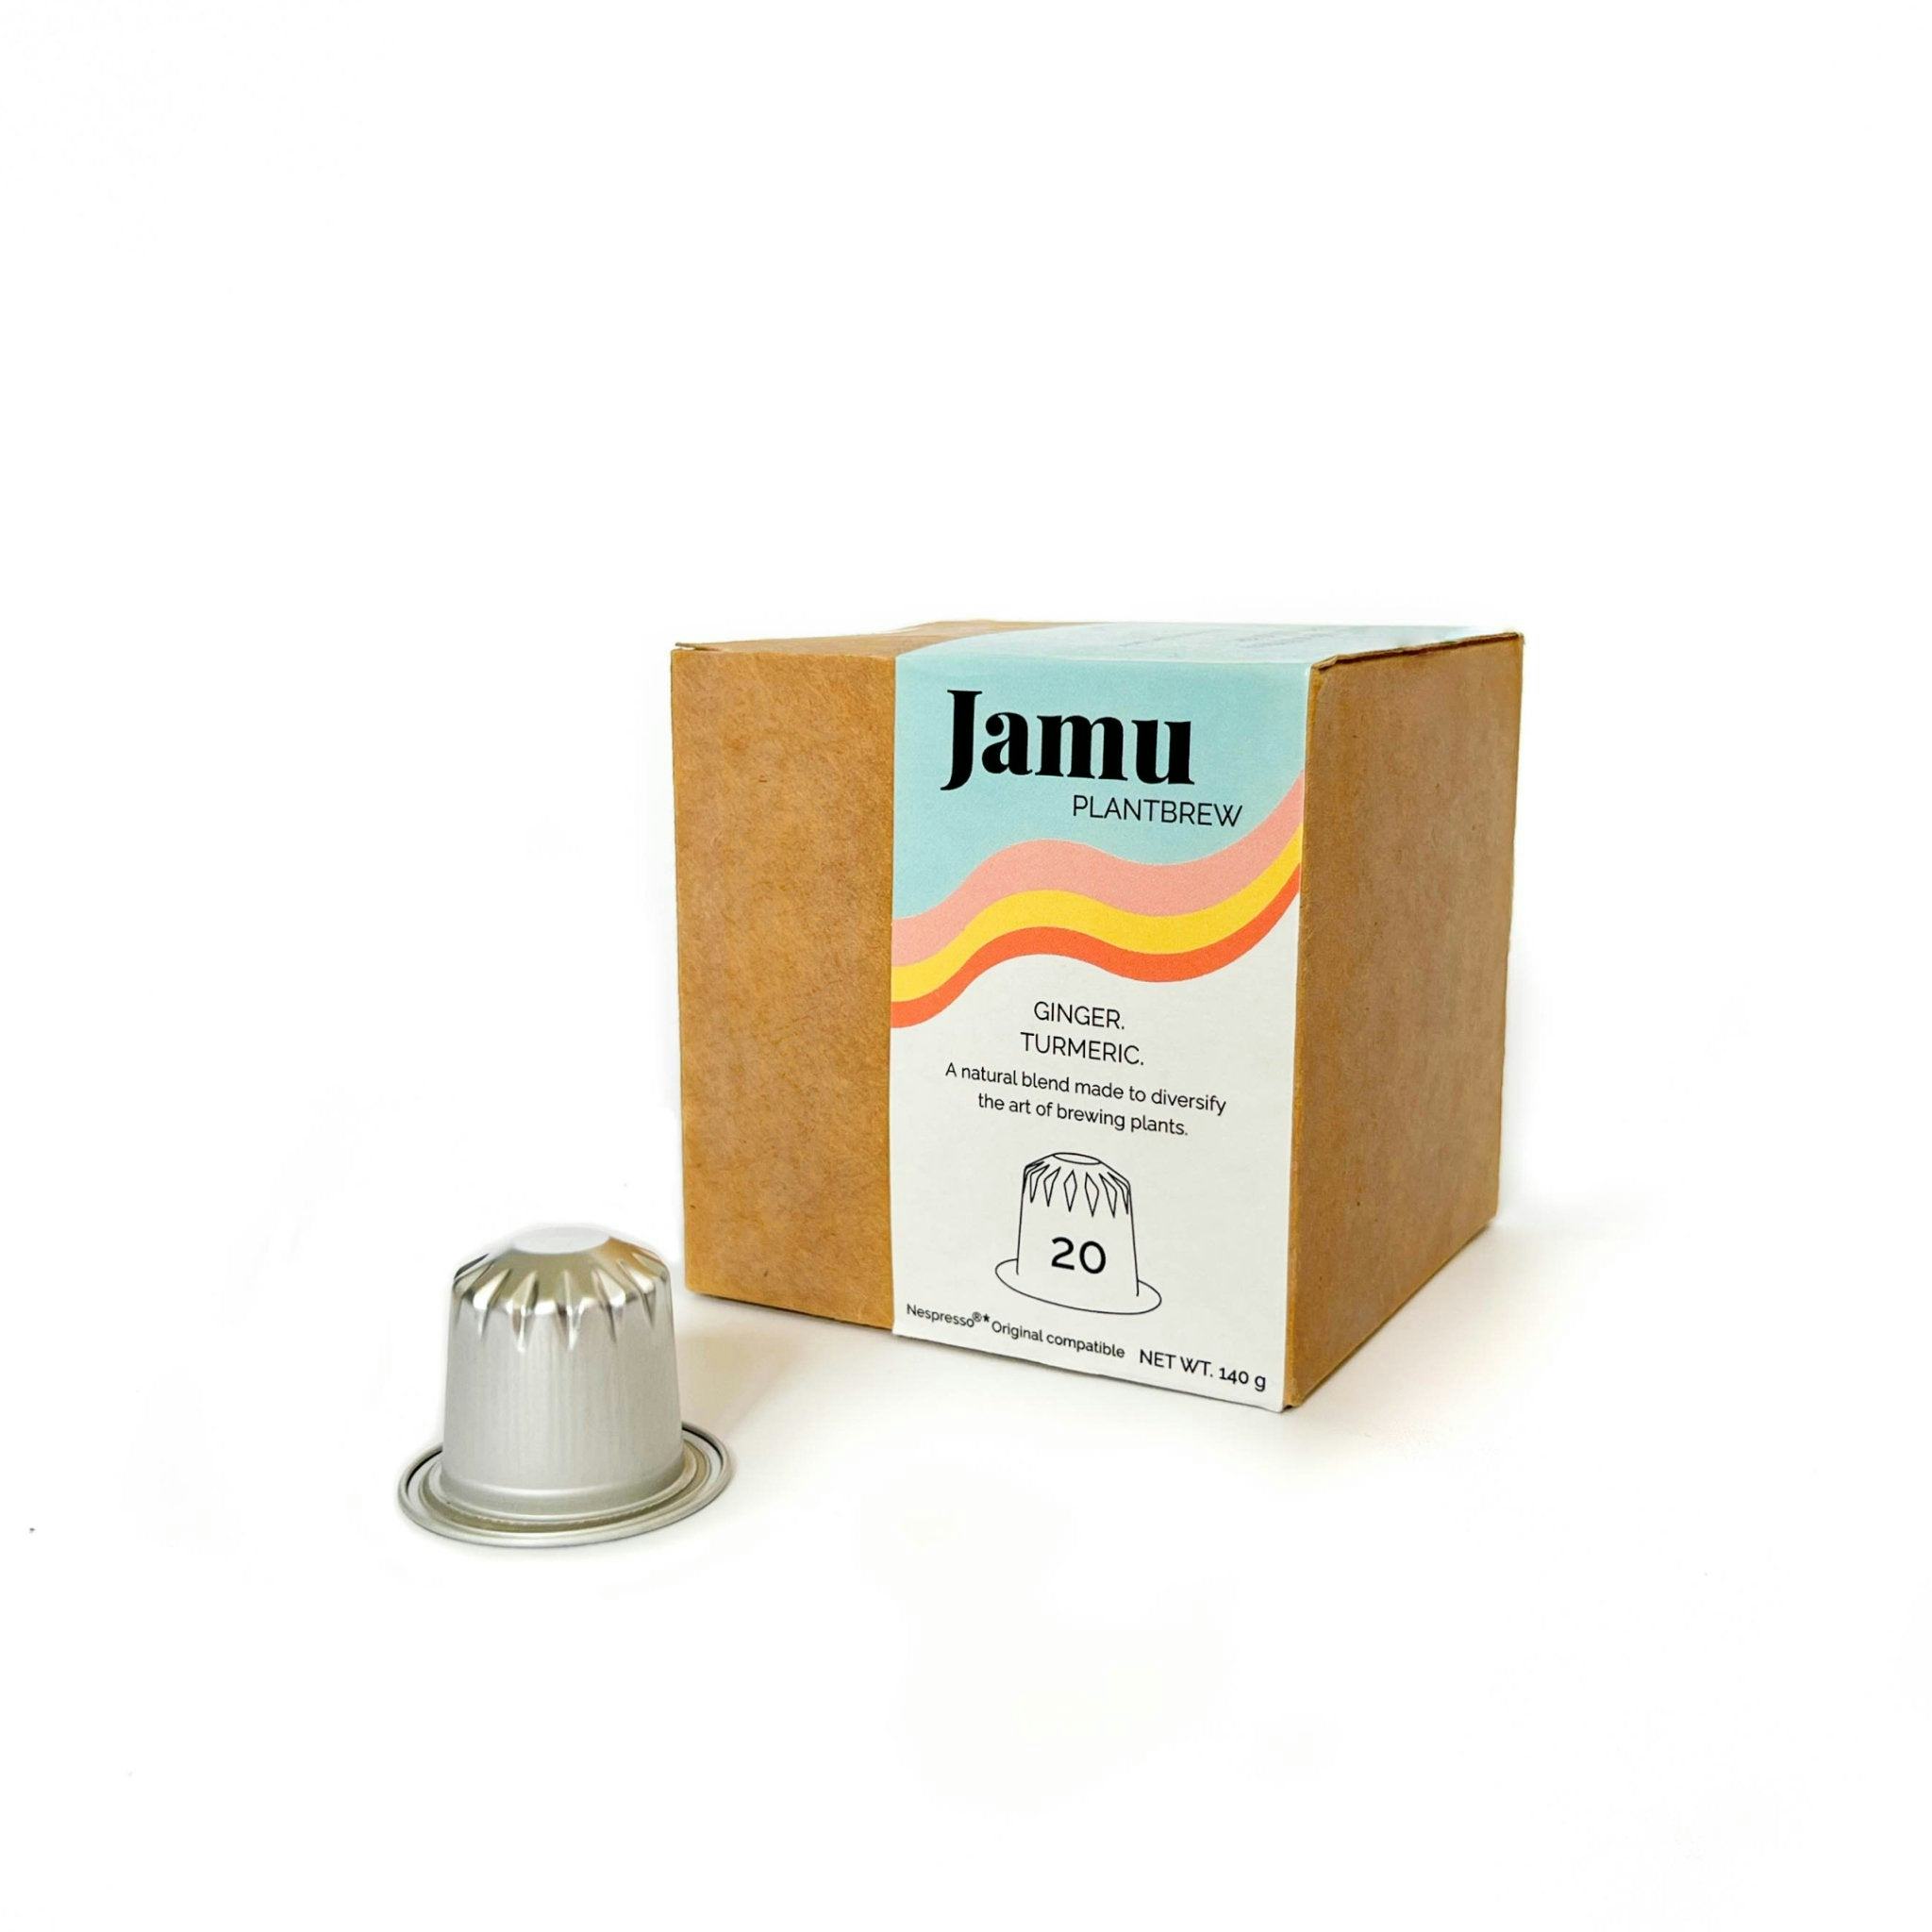 Jamu PlantBrew, Ginger & Curcuma (20 capsules), produit artisanal en vente directe en Suisse